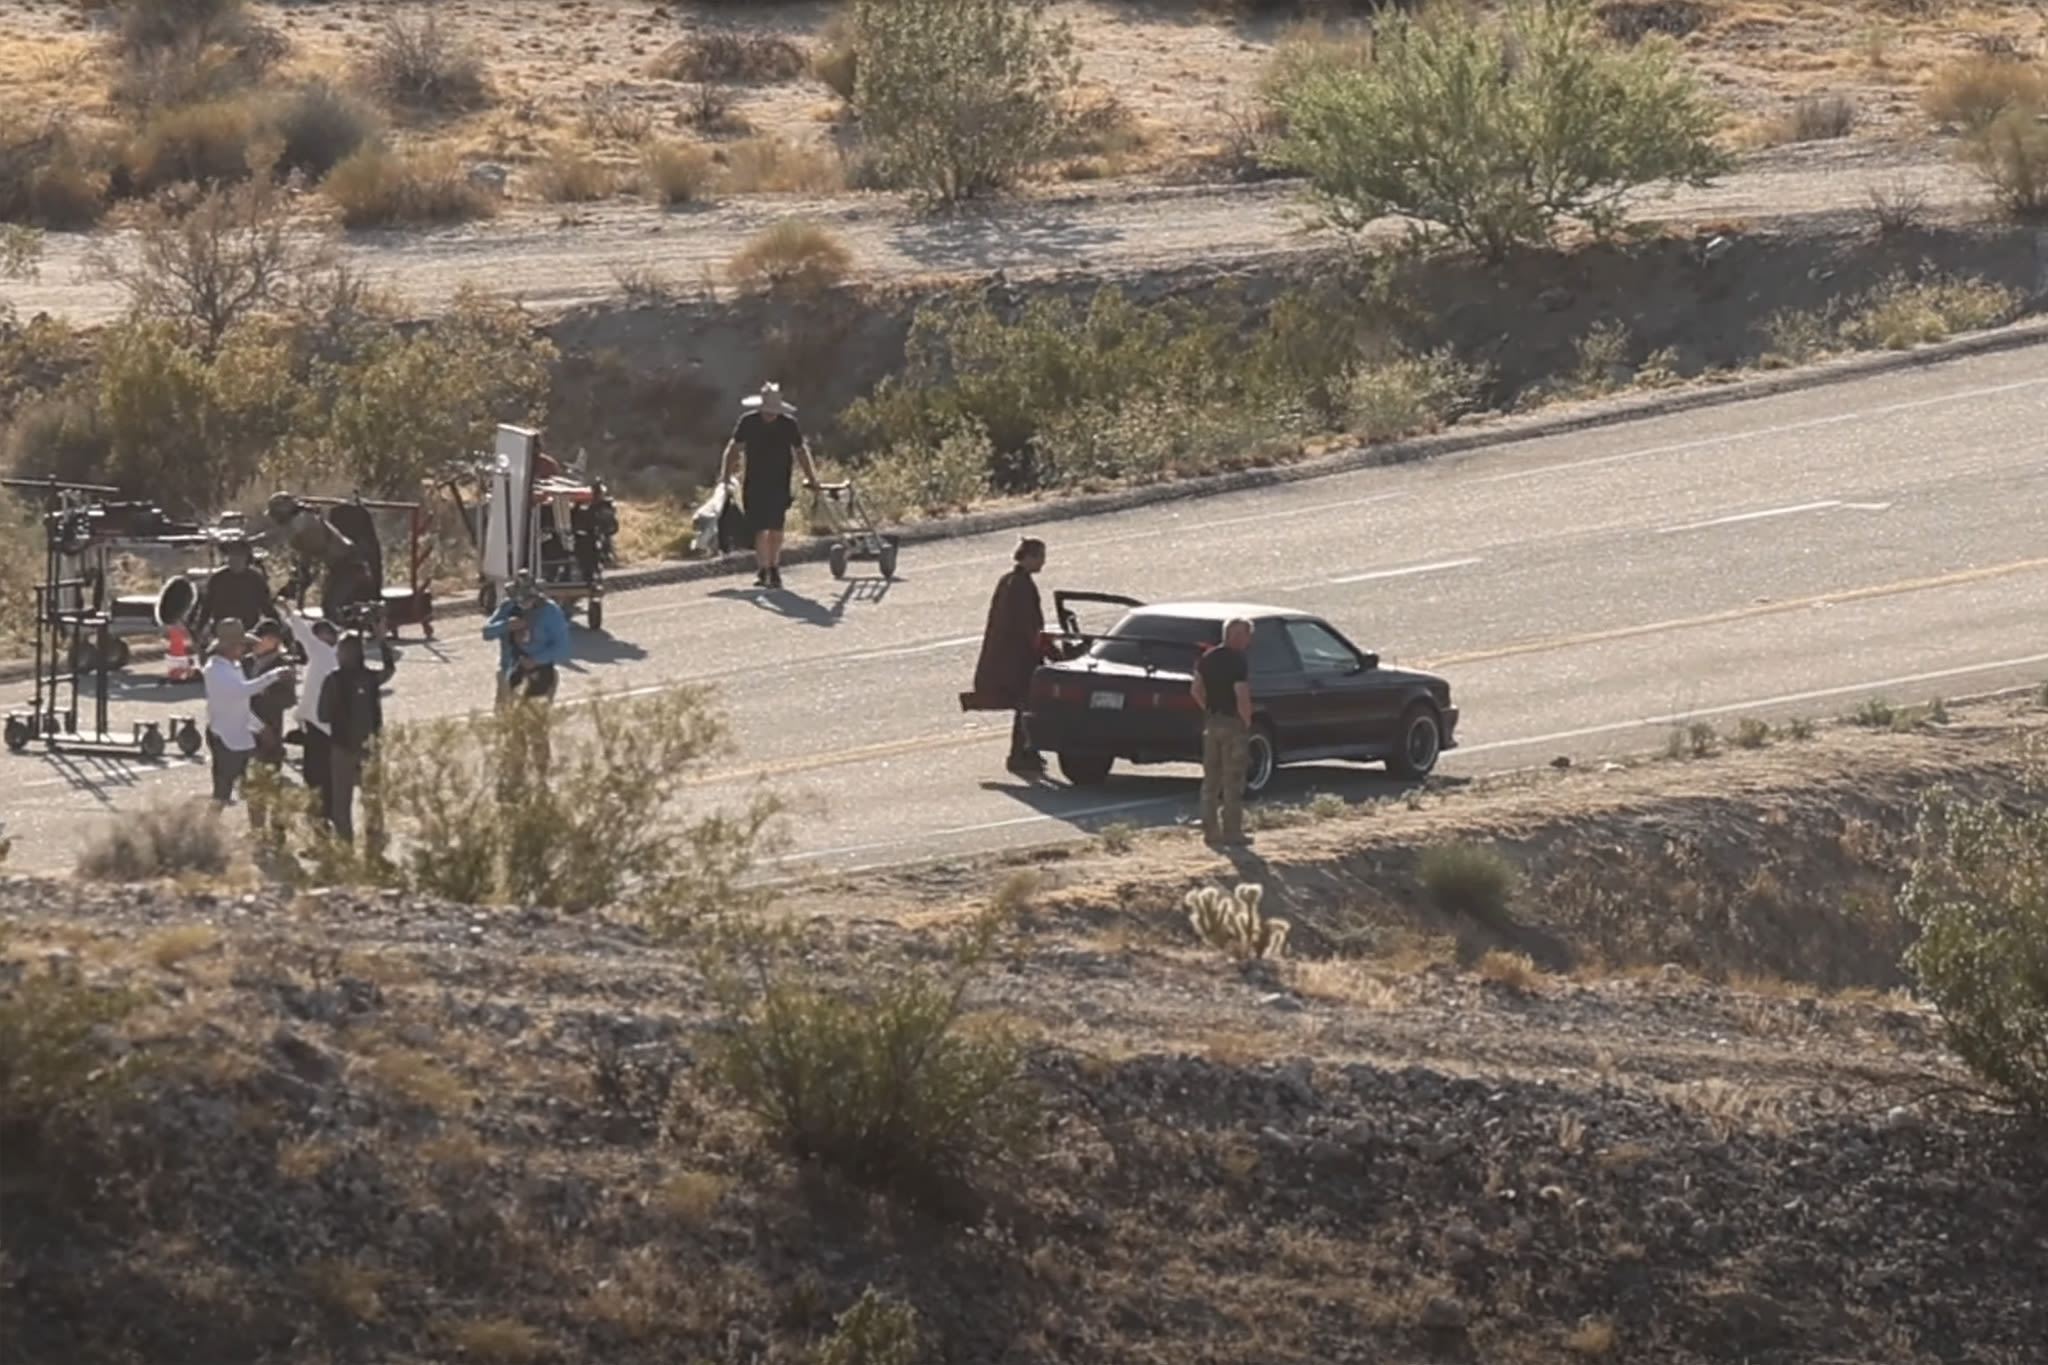 Oscar-winning actors film explosive car chase scenes in Calif. park